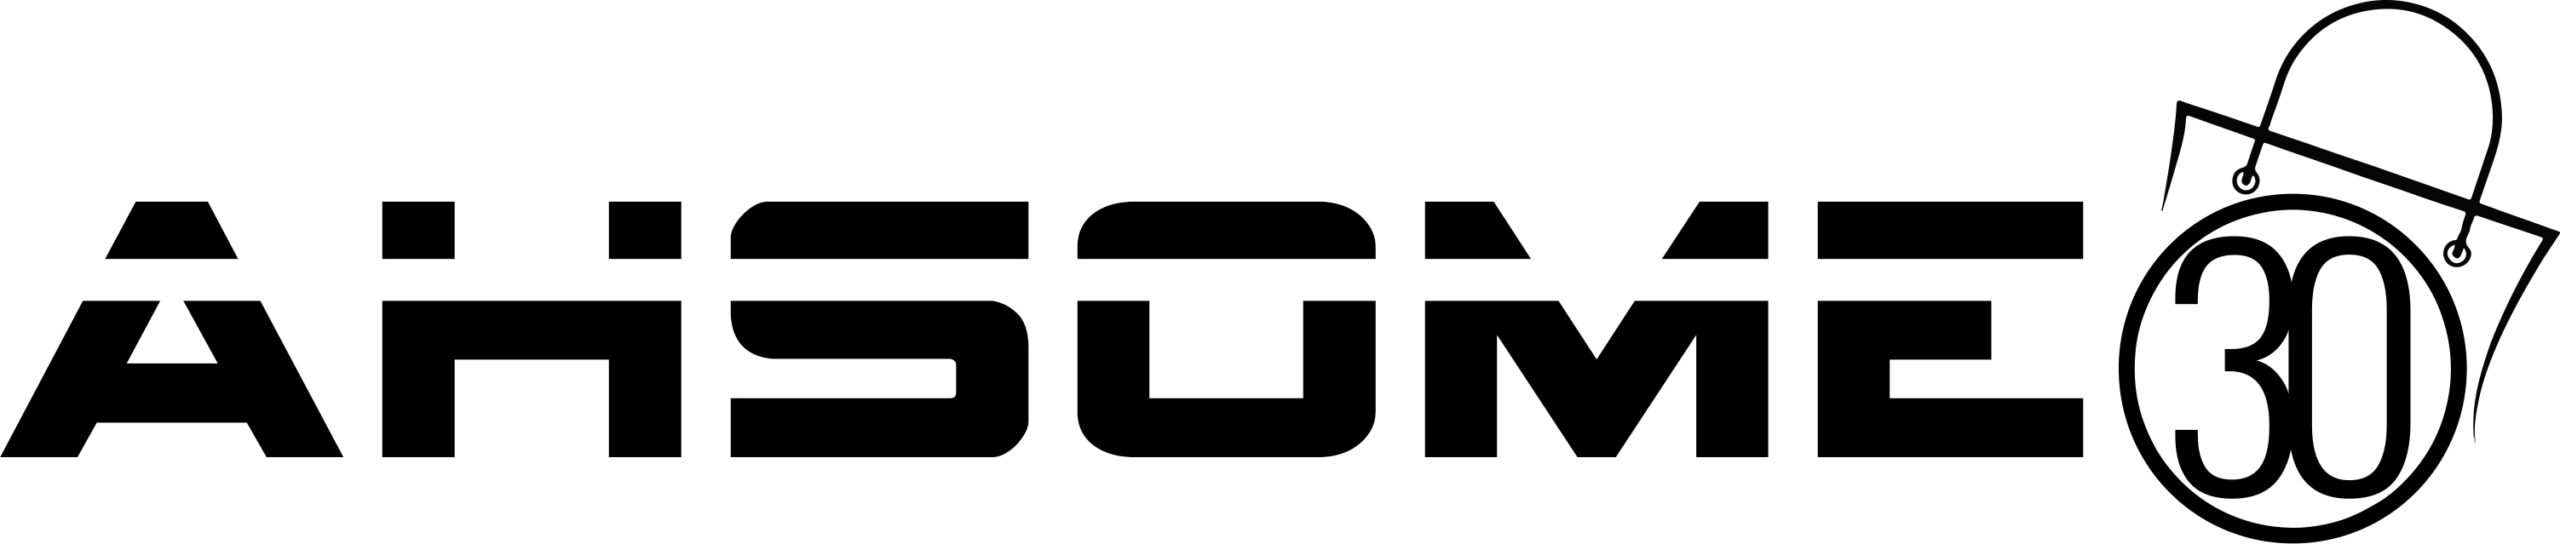 Final_Logo-trim